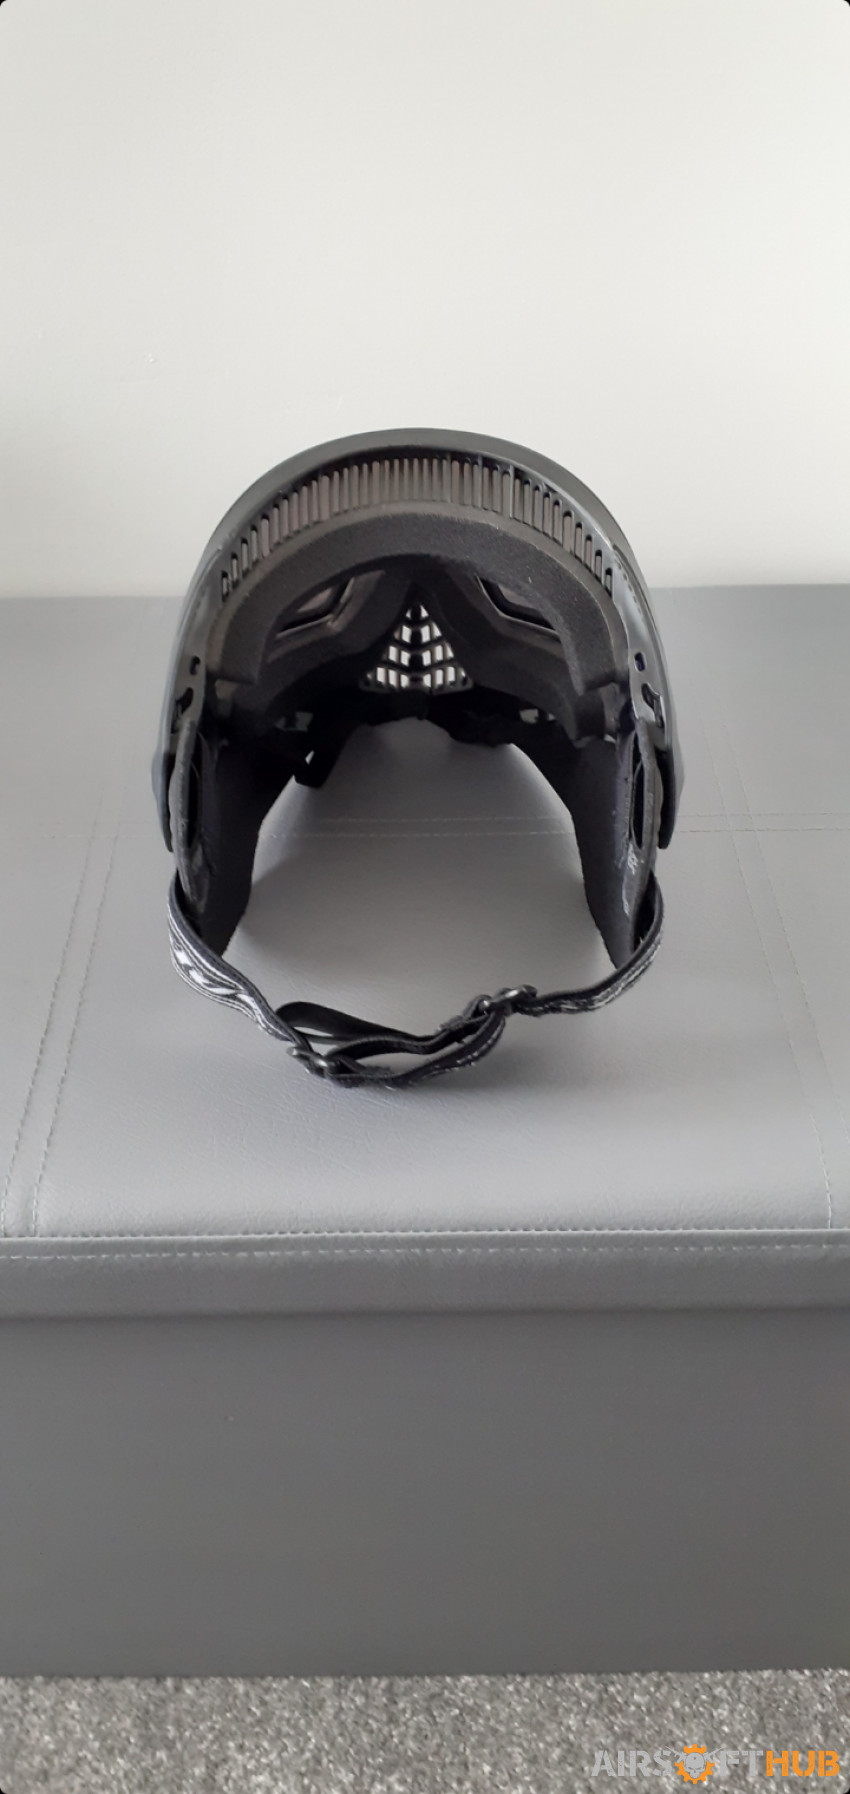 Dye i4 Mask - Used airsoft equipment